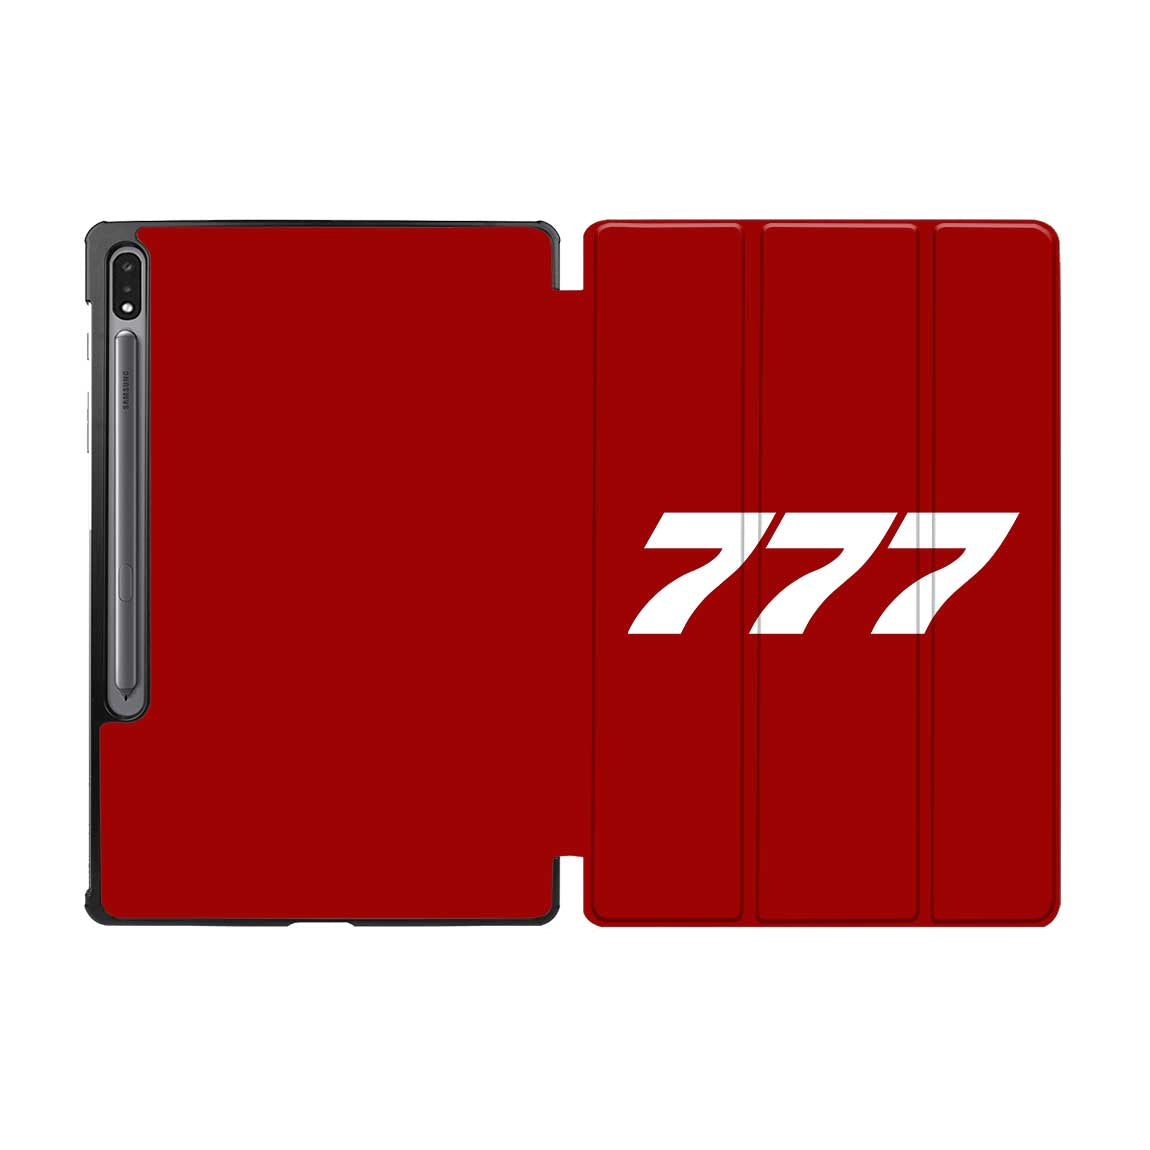 777 Flat Text Designed Samsung Tablet Cases